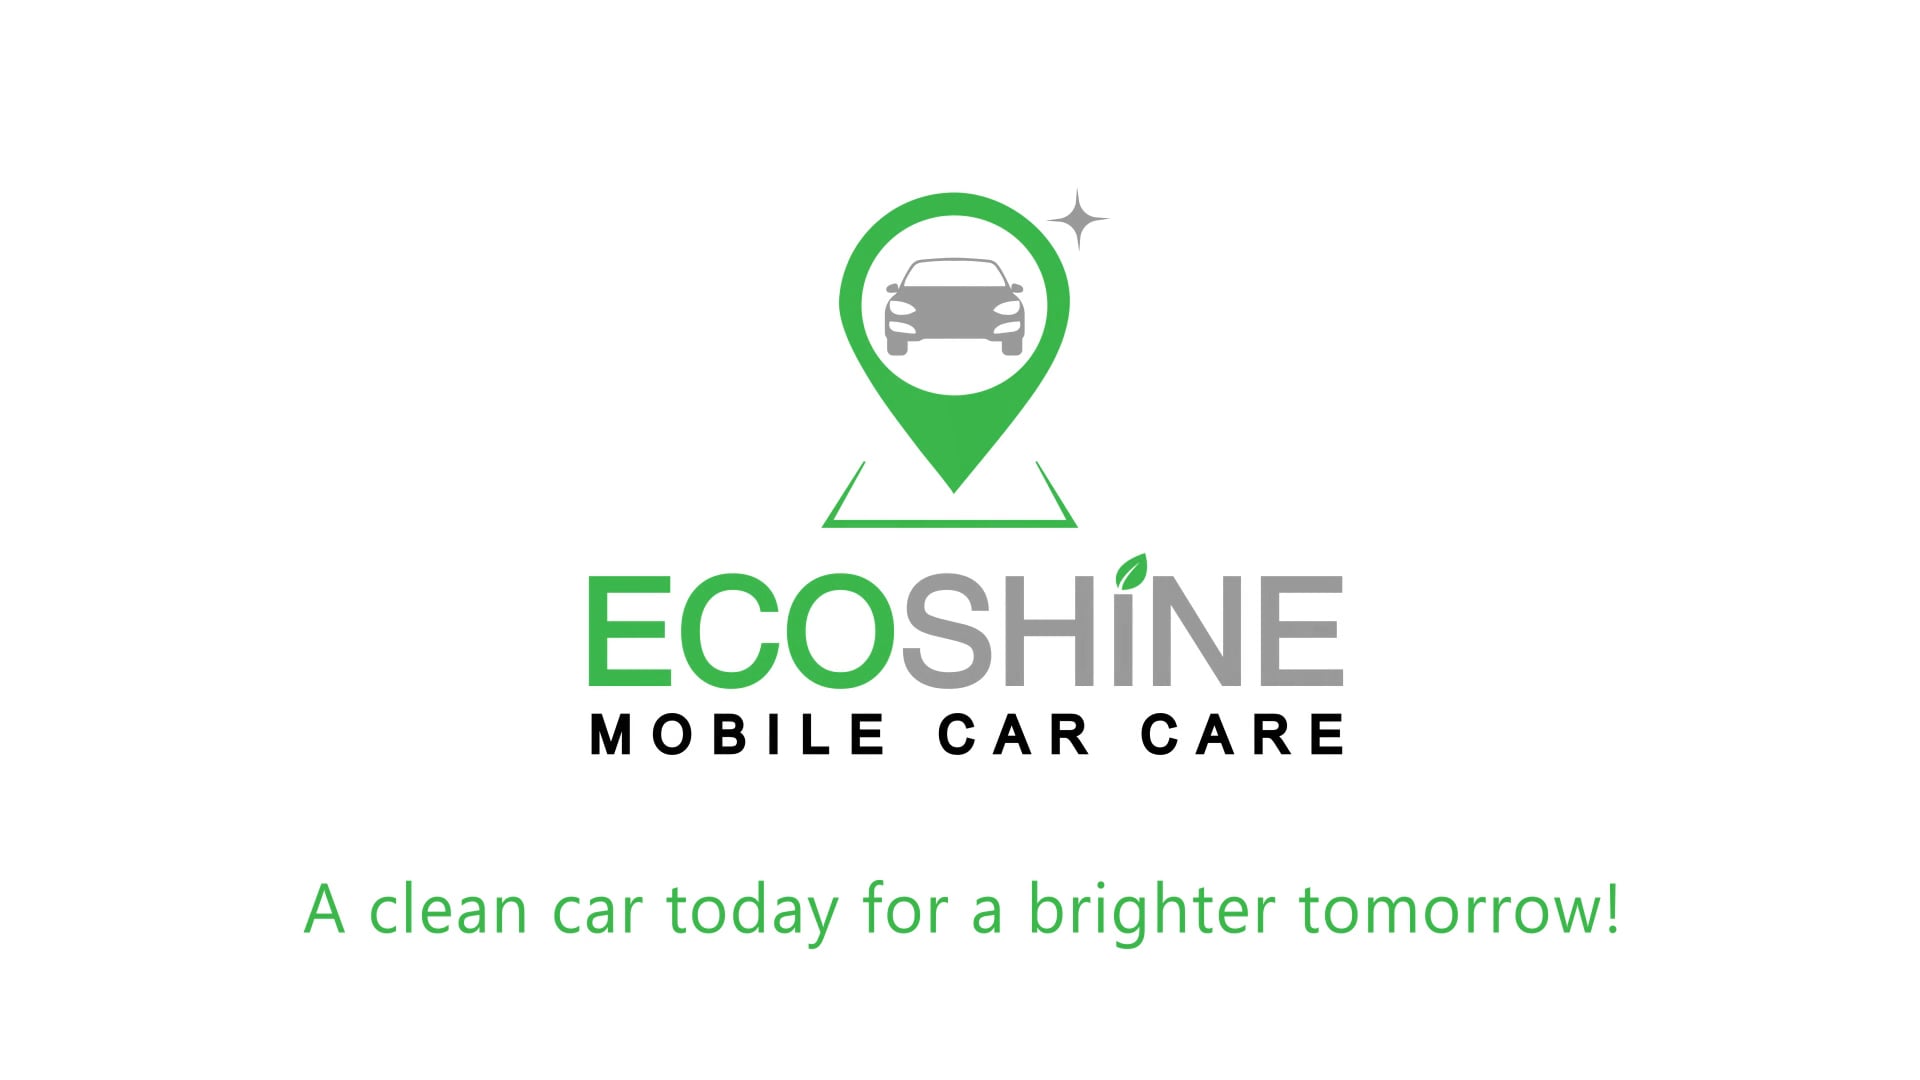 ECOSHINE Mobile Car Care